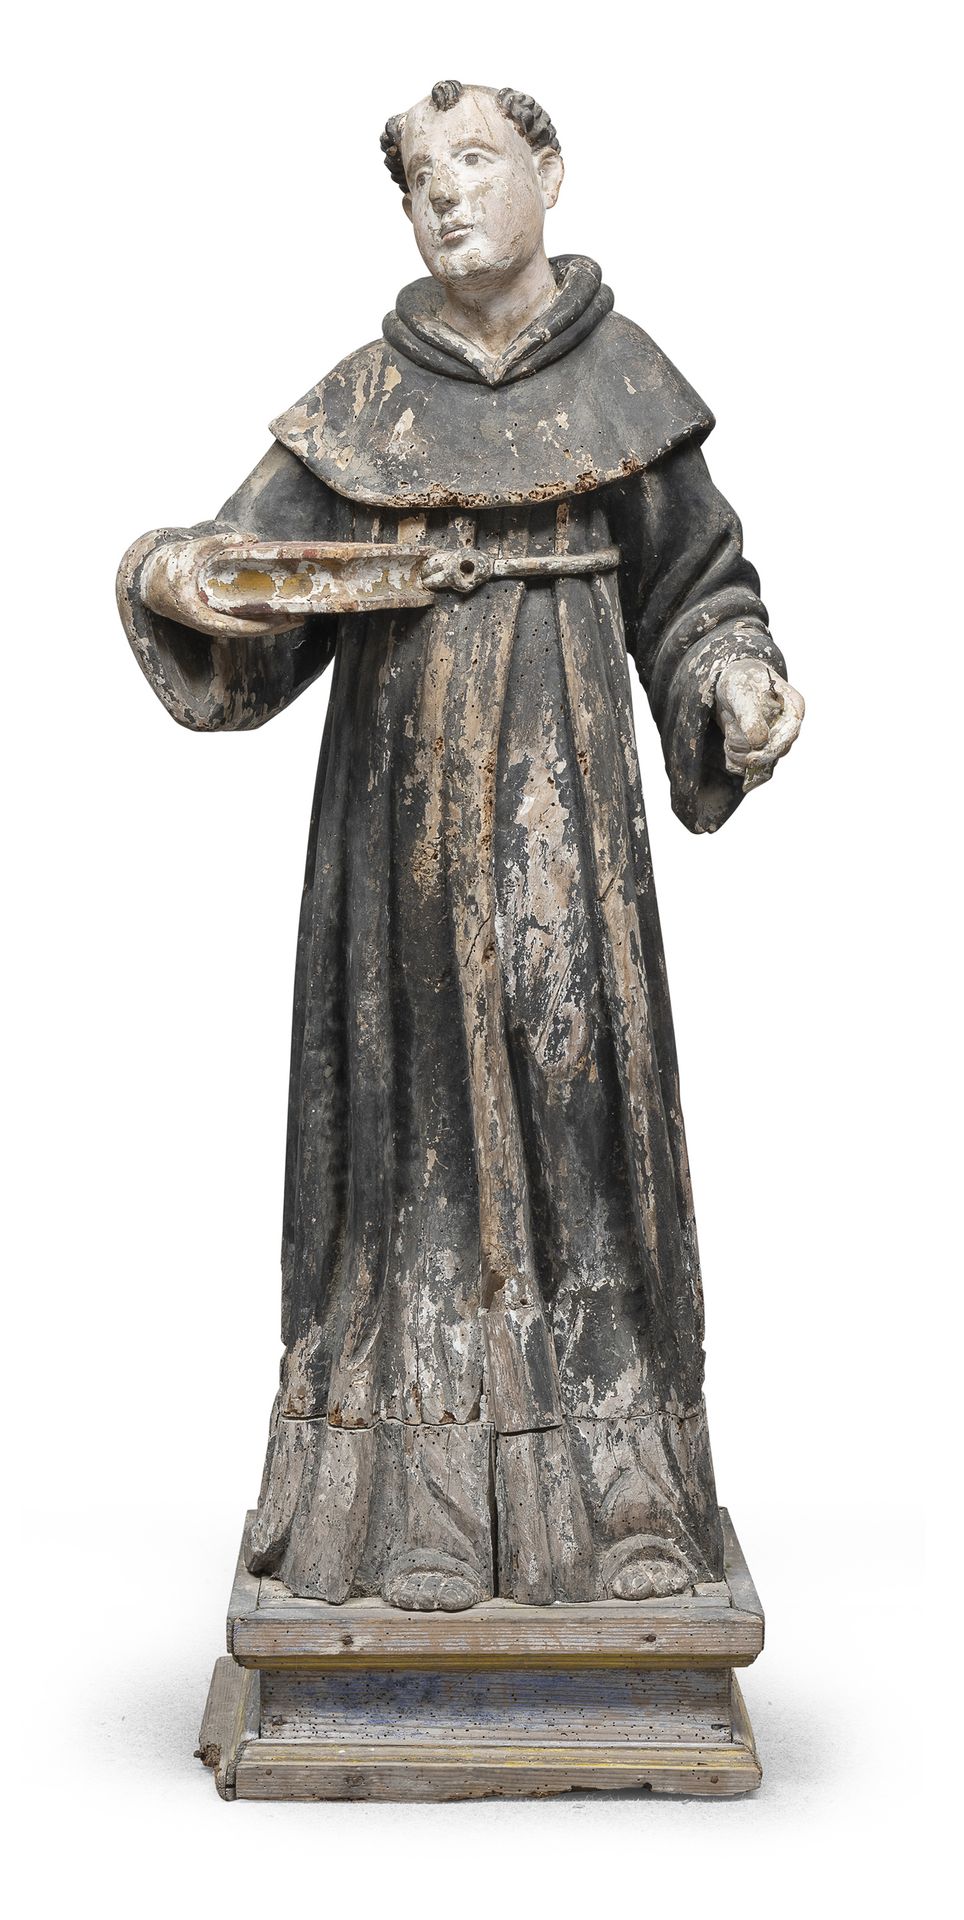 Null 圣人雕塑，意大利中部，18世纪

采用多色漆木。这幅画呈直立姿势，手里拿着书。方形底座。

尺寸为130 x 52 x 30厘米。

漆面脱落，缺陷，&hellip;